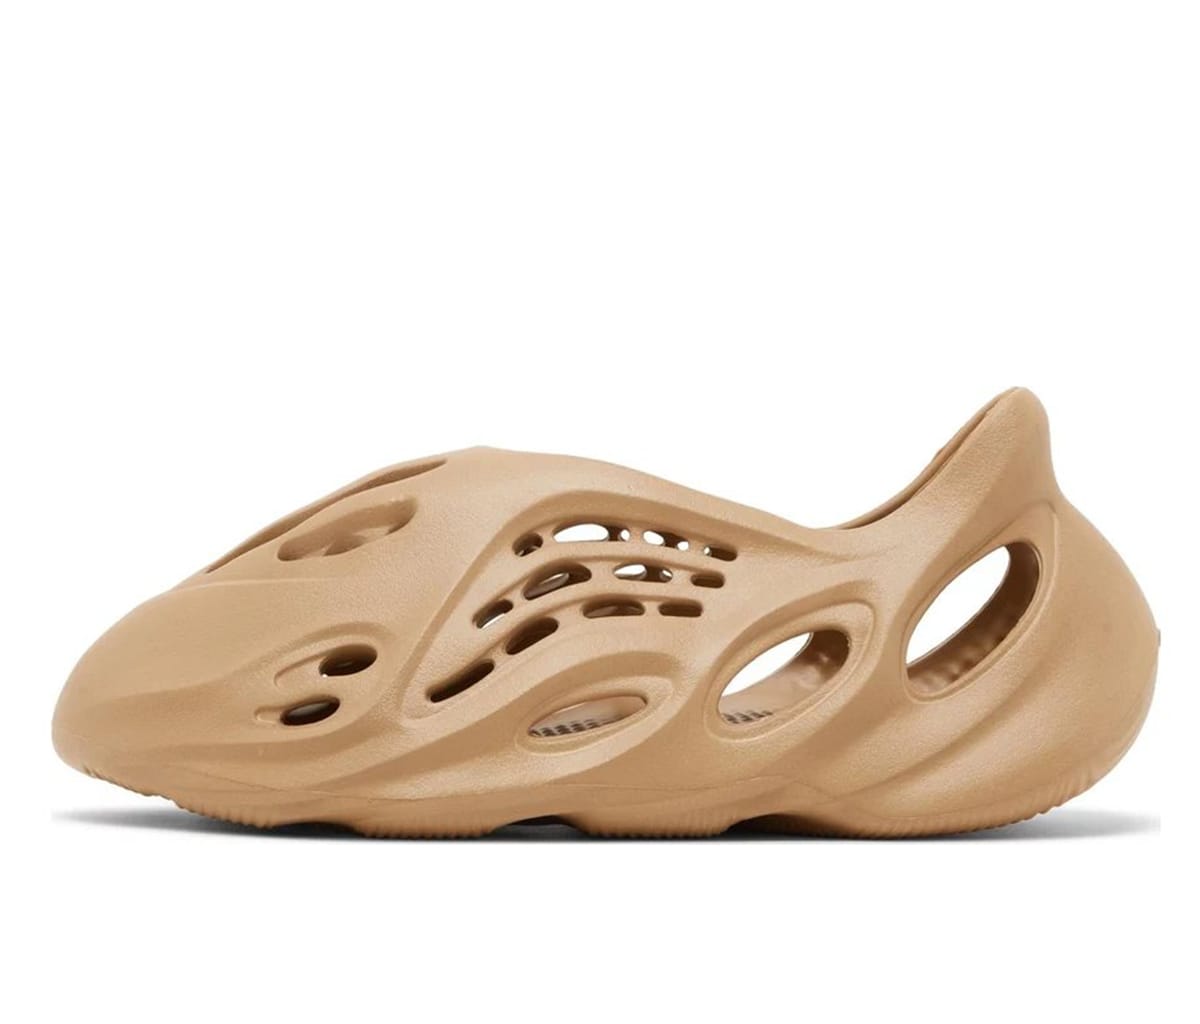 adidas YEEZY Foam Runner “Clay Taupe”